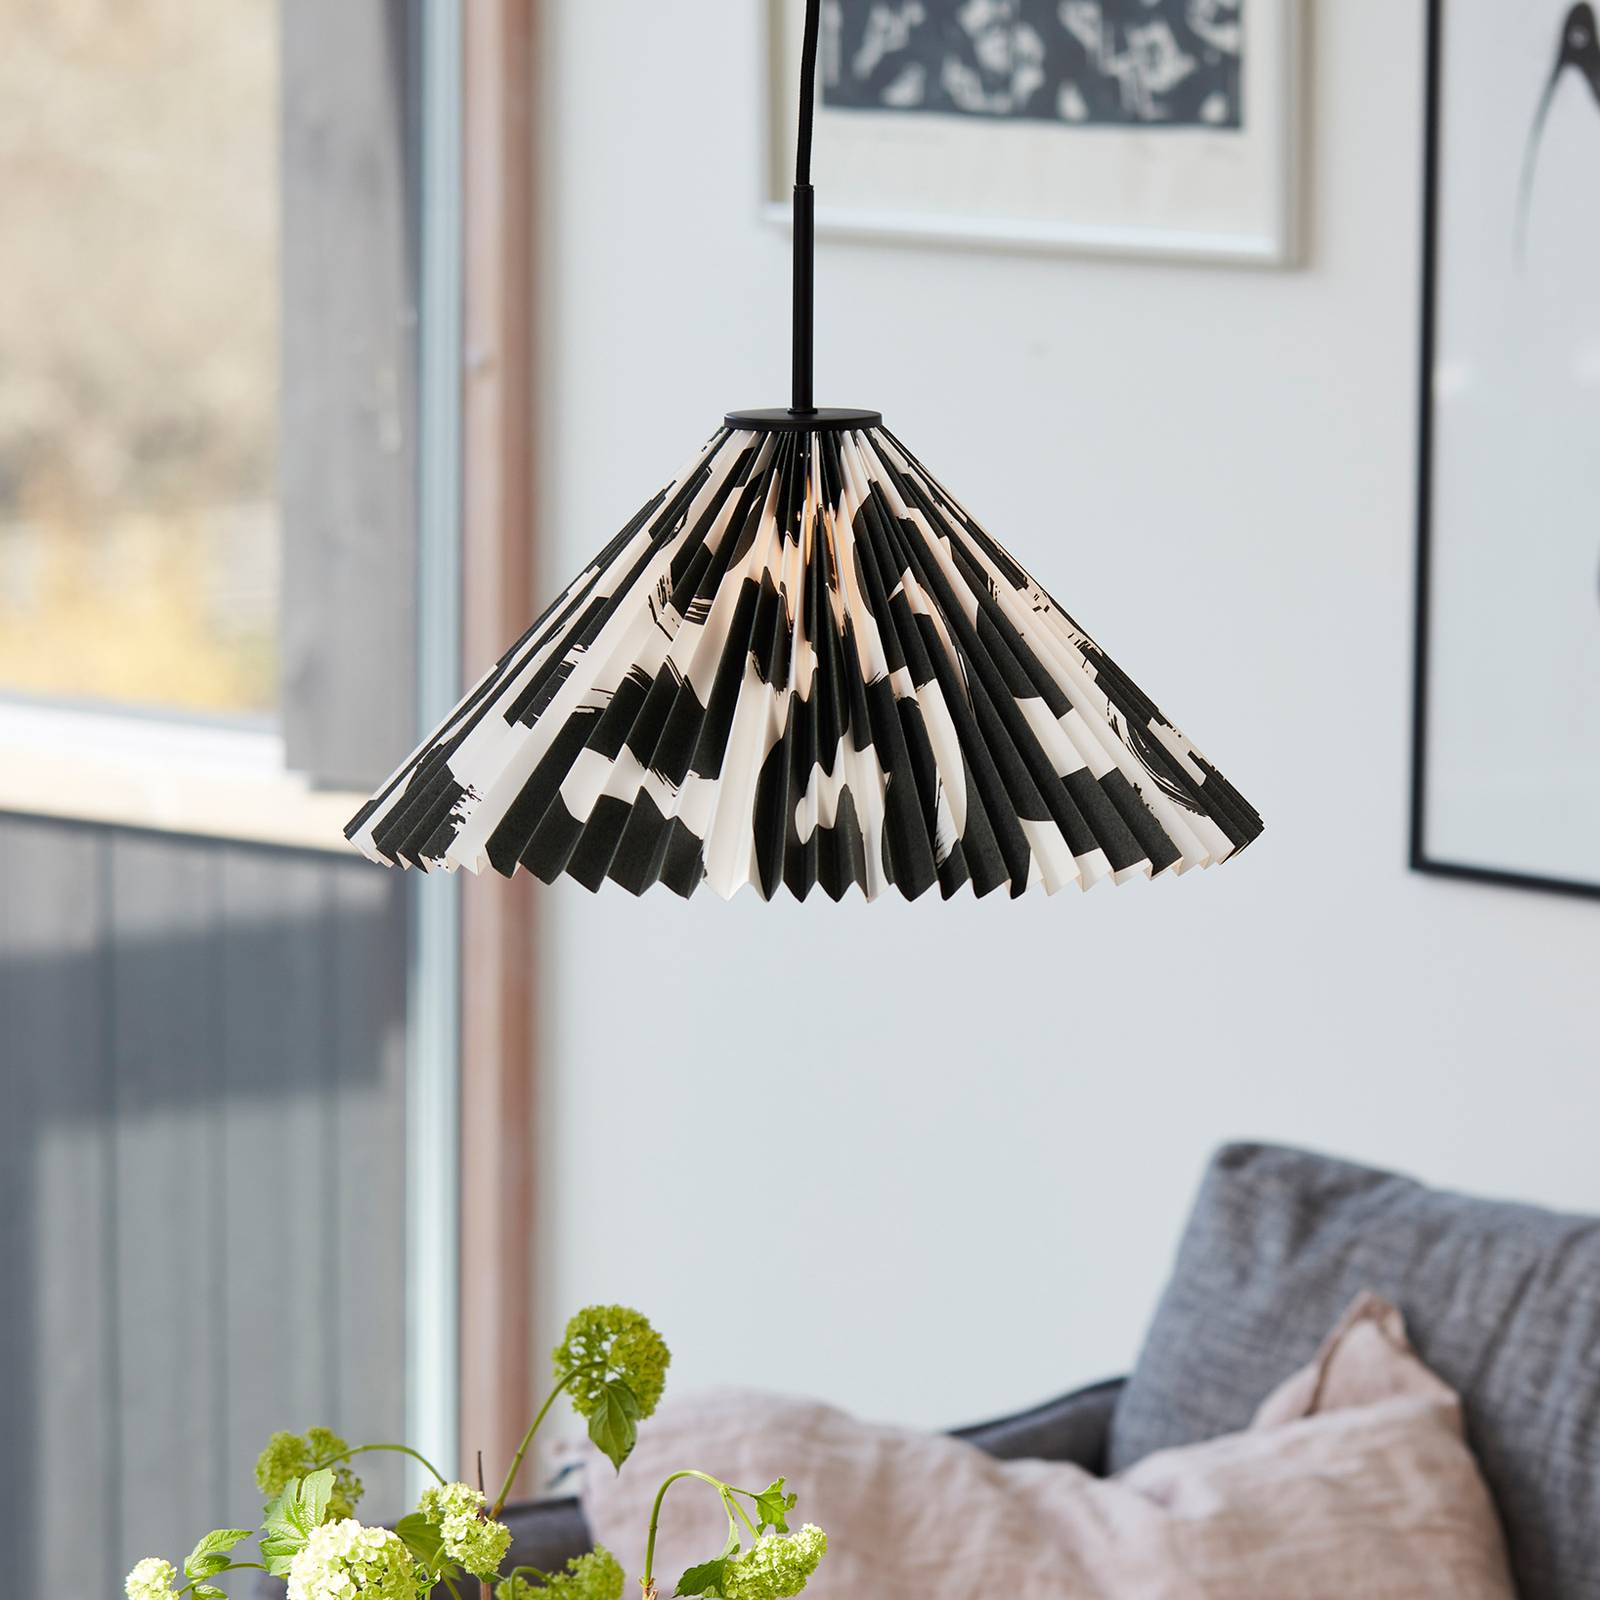 Pr home polly lógó világítás, origami design